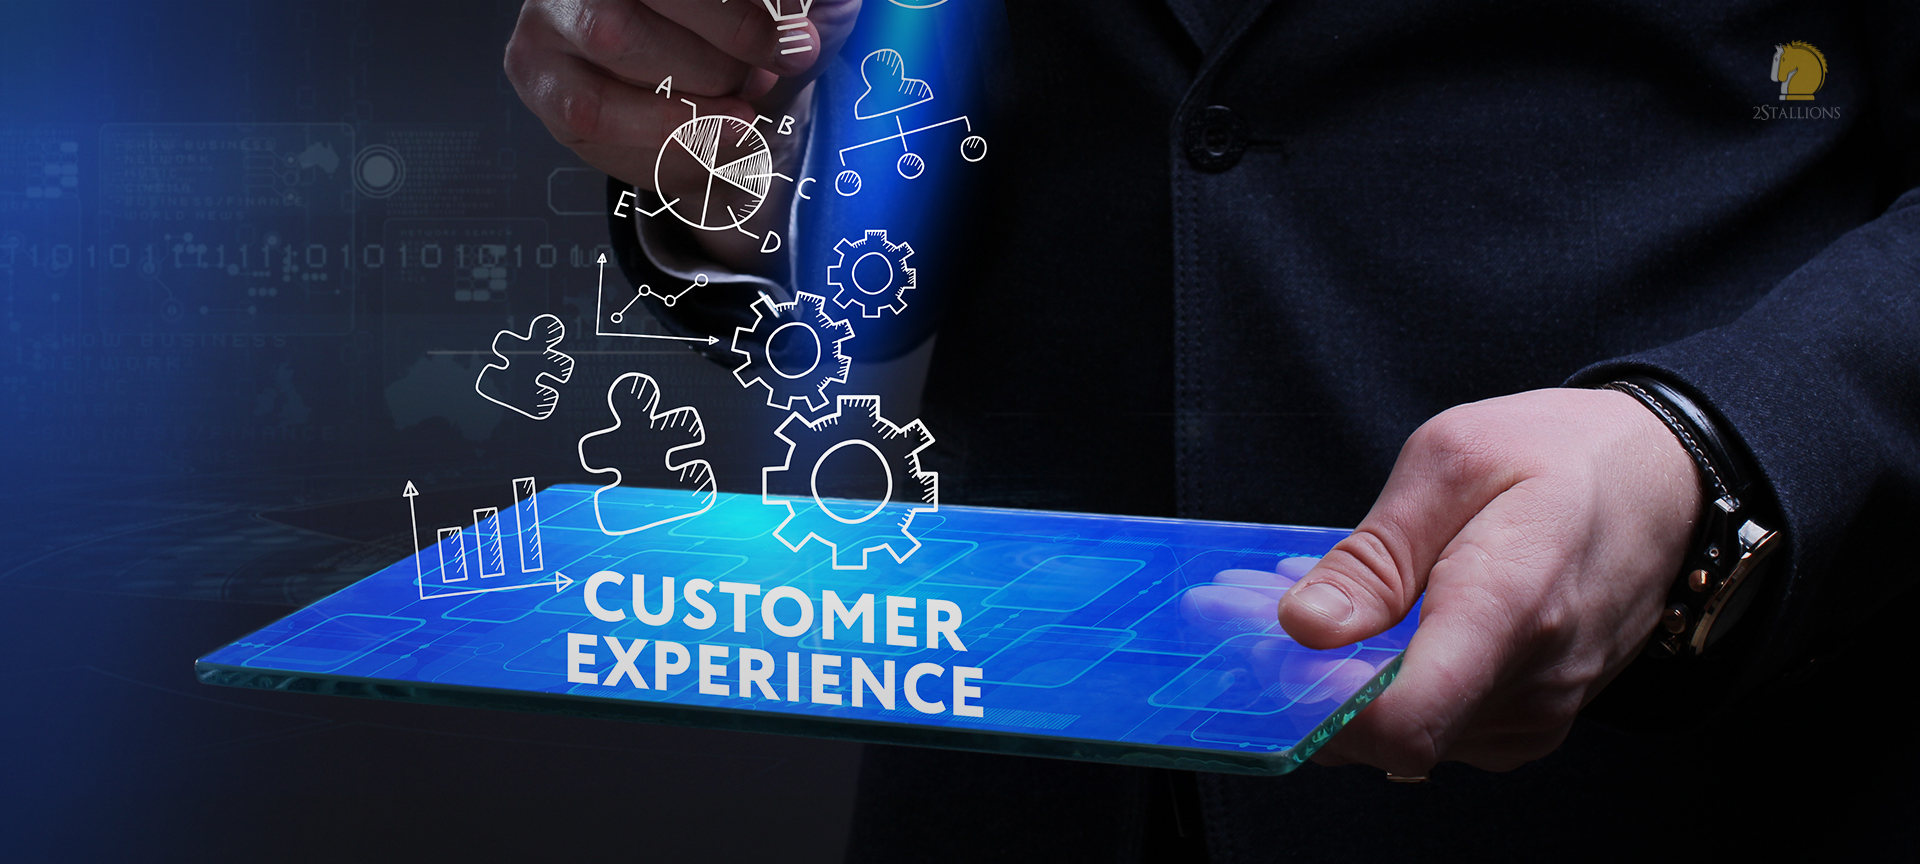 The Digital Customer Experience